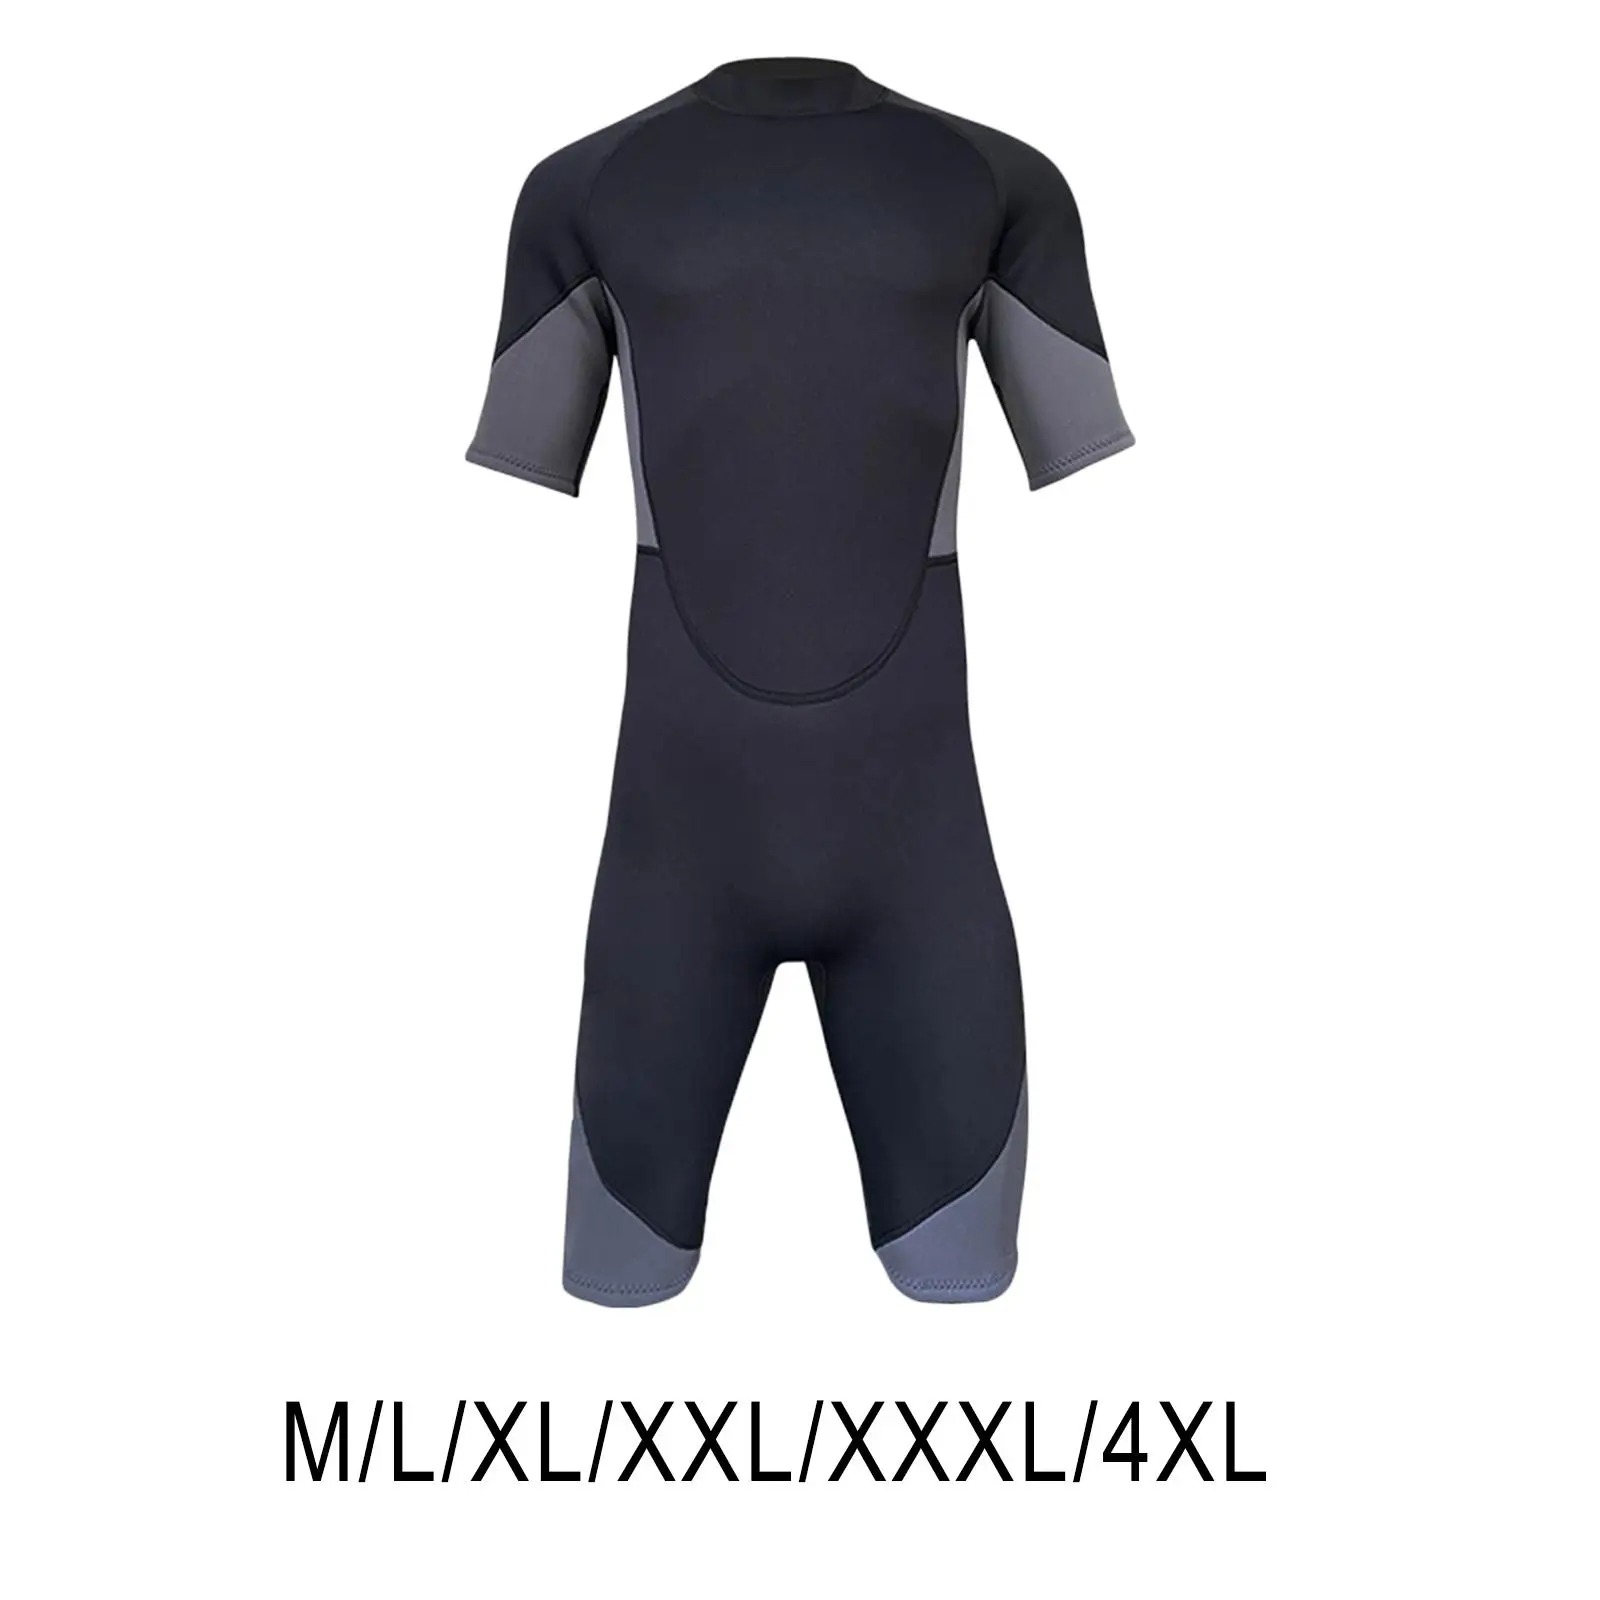 Dive Wetsuit Sports Skins for Men Women, UV   Swimwear for Snorkeling Surfing Swimming Kayaking Sailing Canoeing